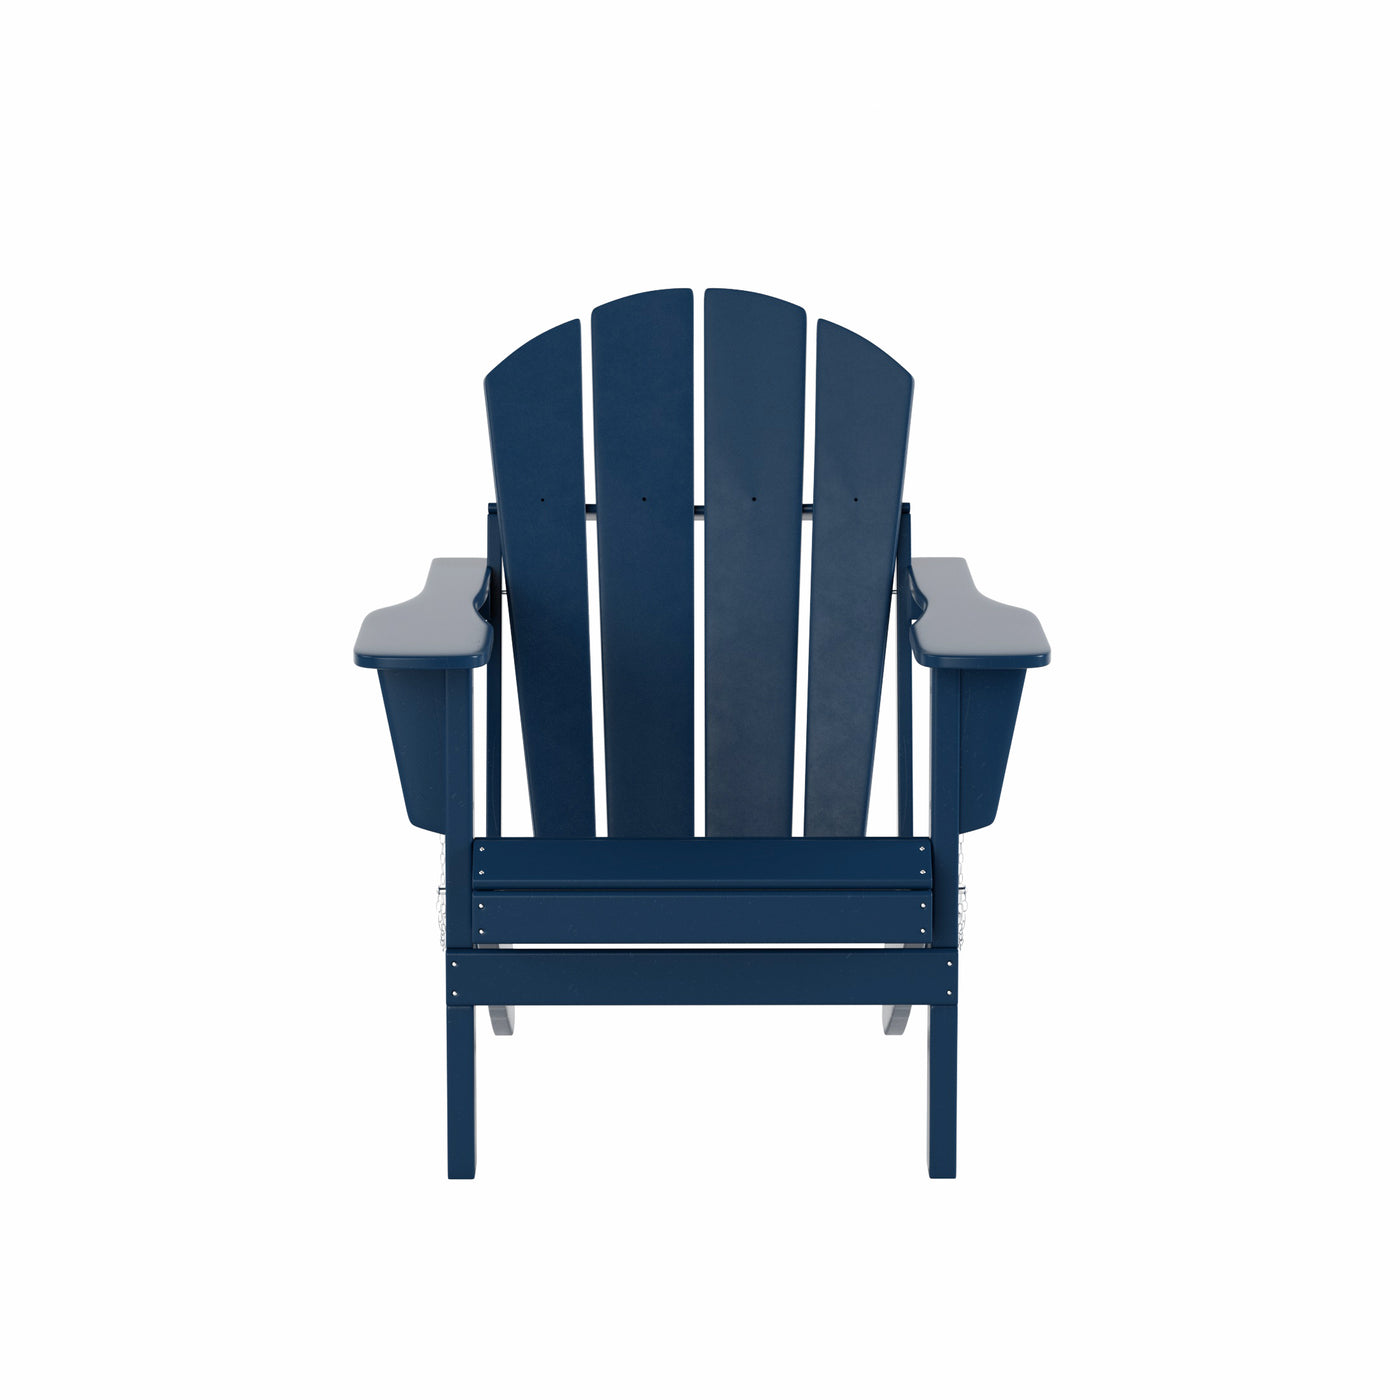 Malibu 3-Piece Classic Folding Adirondack Chair with Ottoman Side Table Set